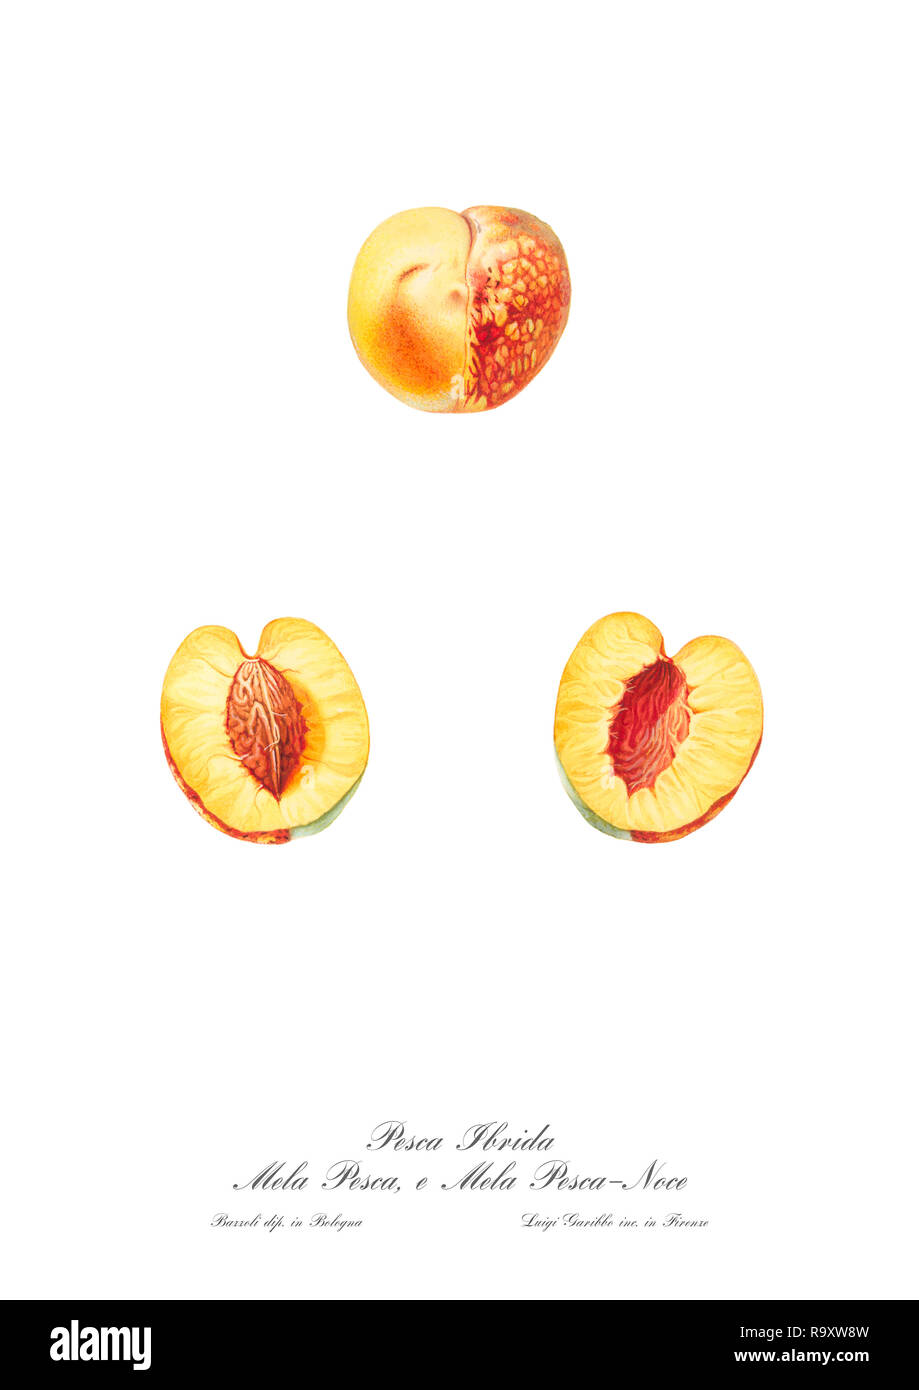 Vintage unique botanical illustration of a peach Stock Photo